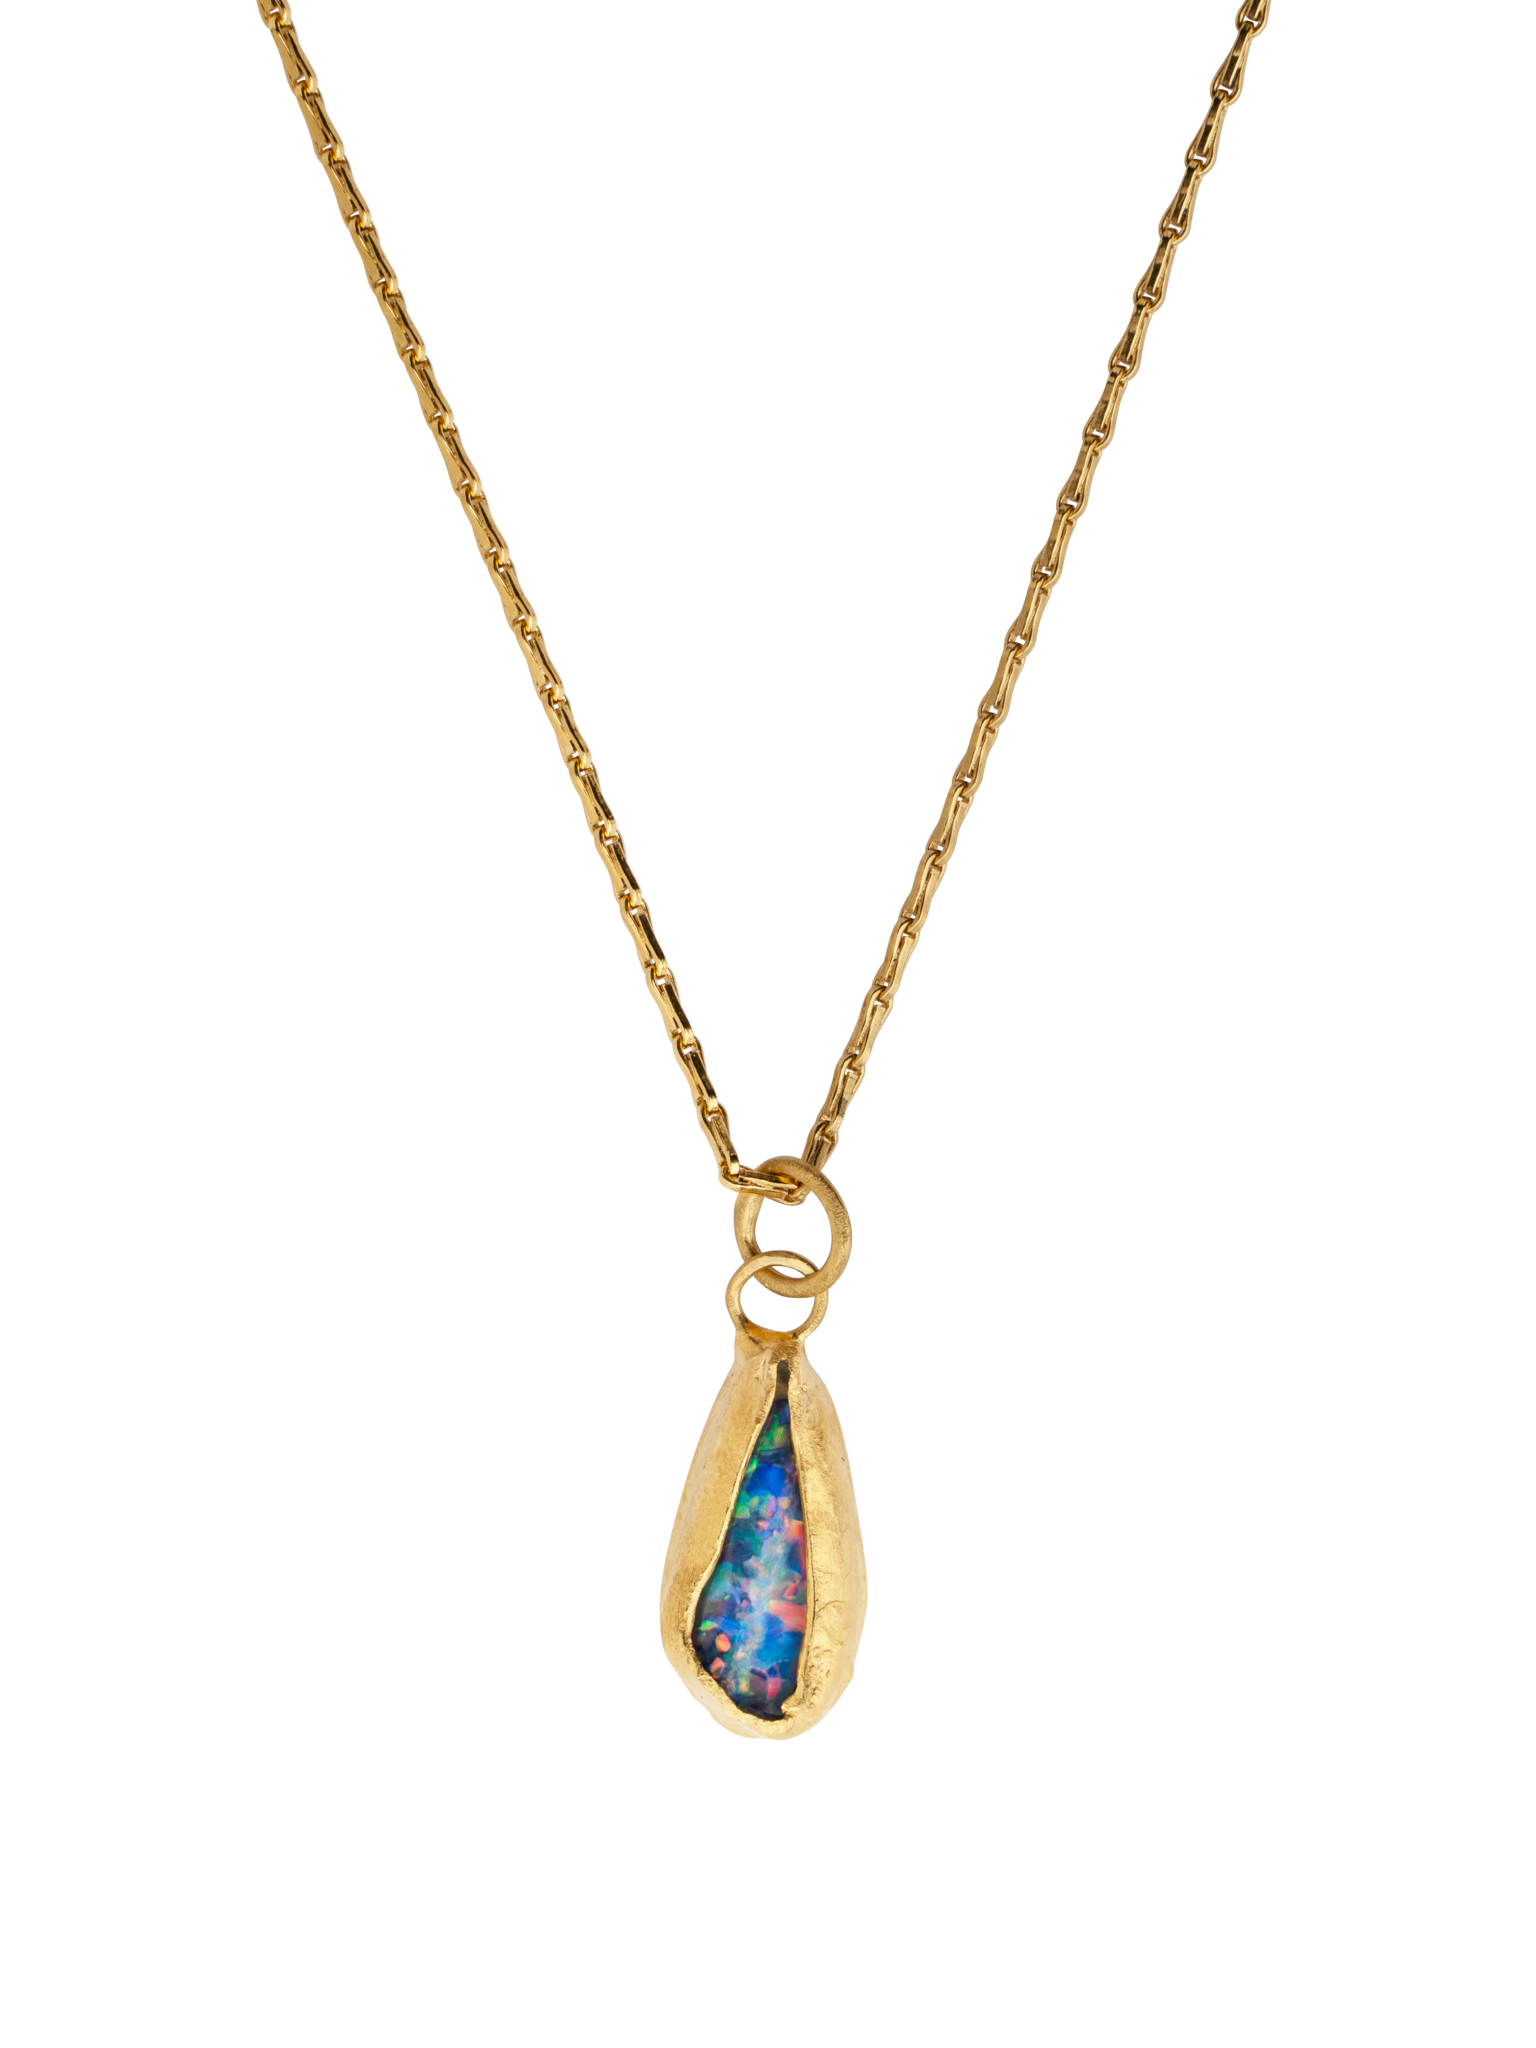 Australian opal drop pendant necklace